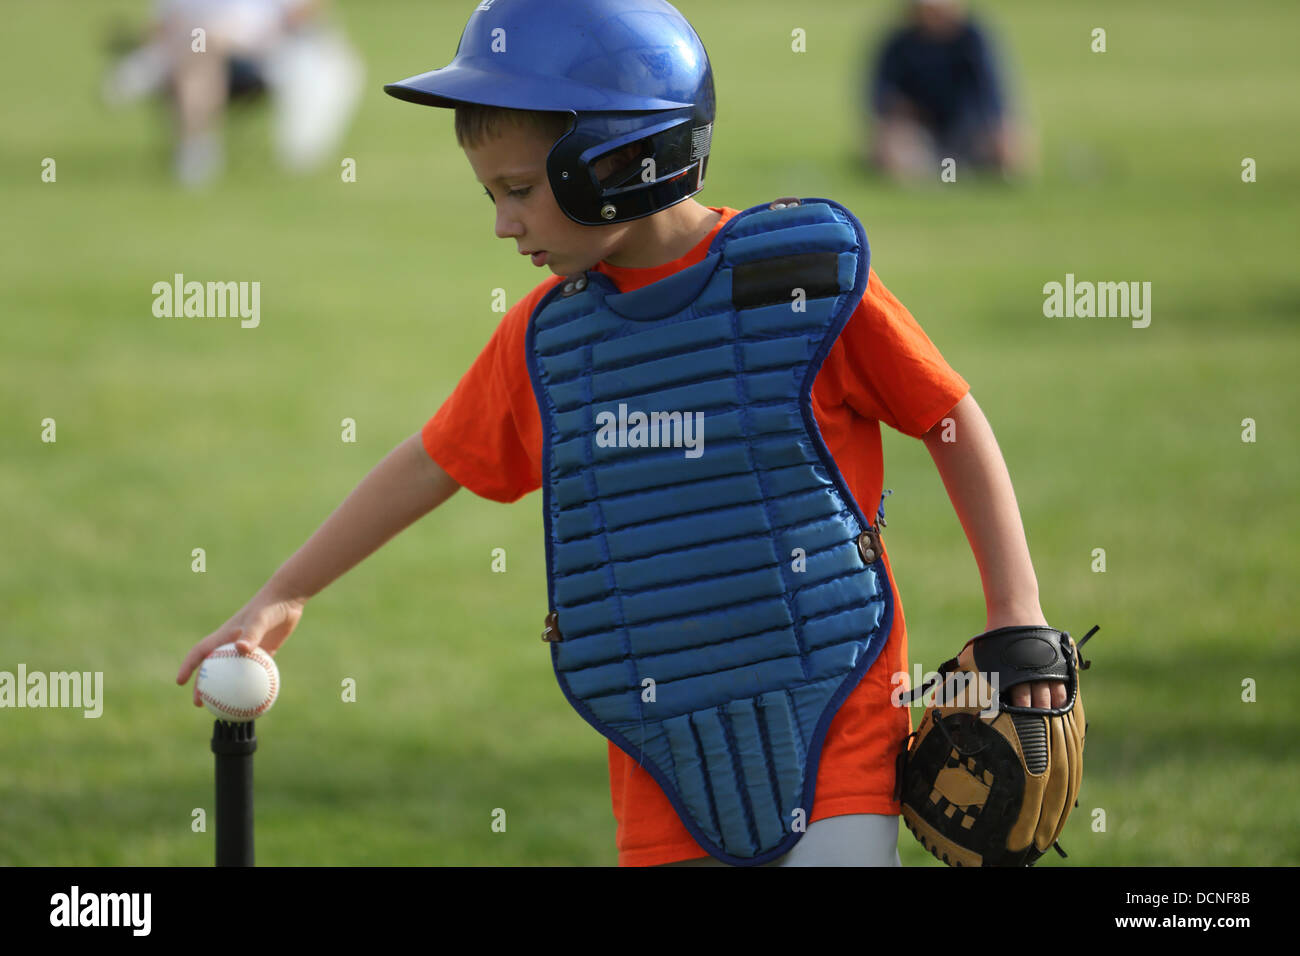 Young boy puts baseball on tee Stock Photo